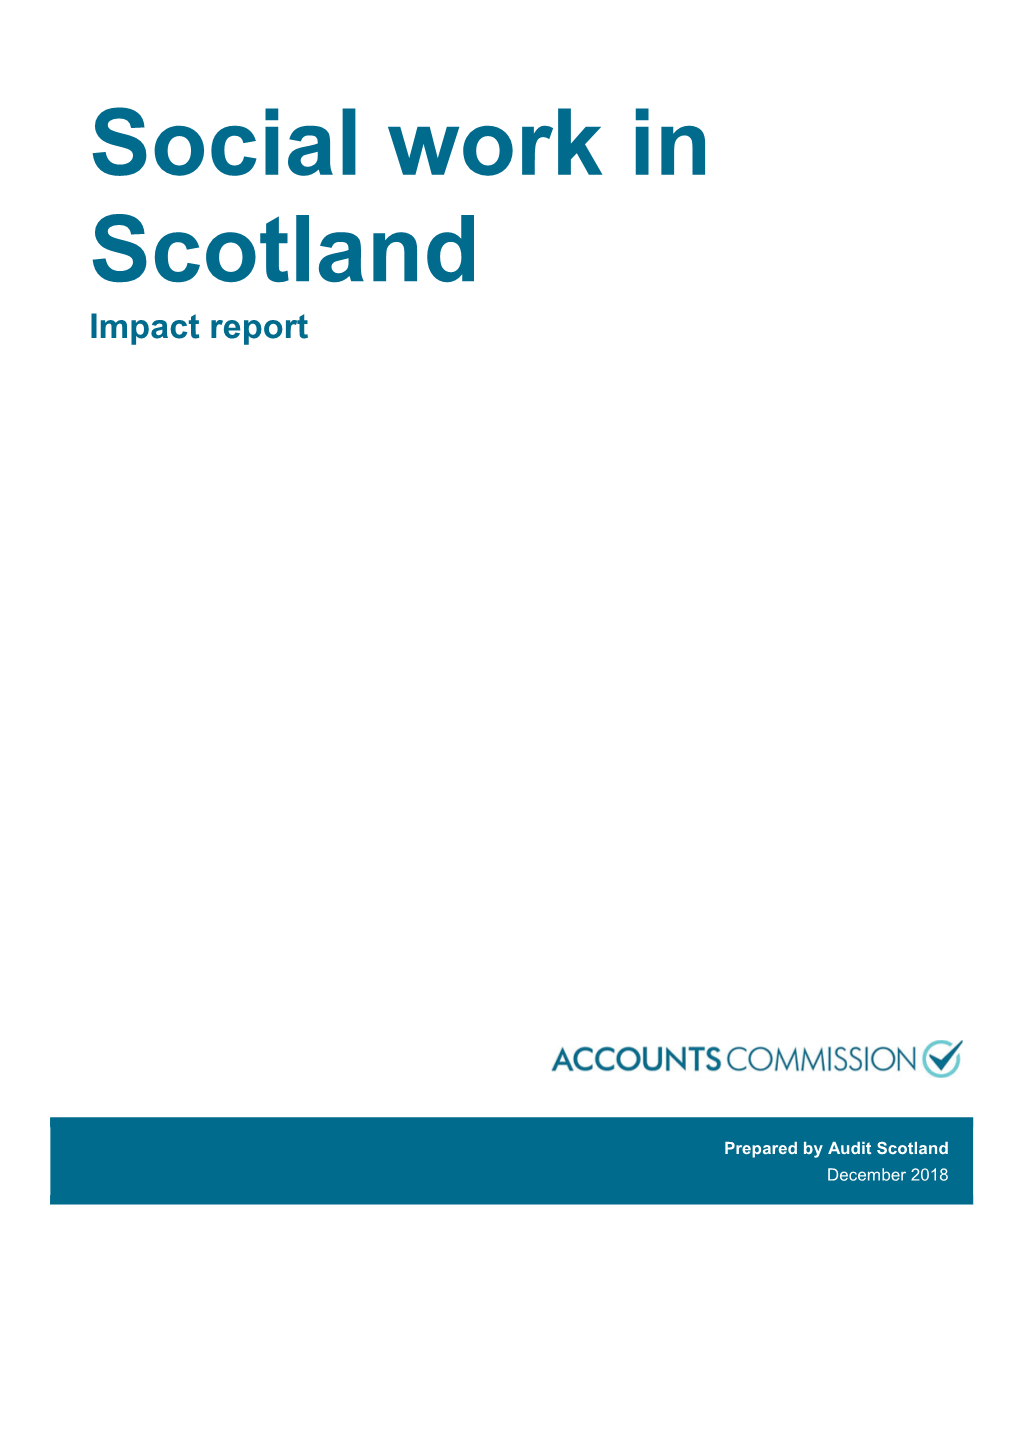 Social Work in Scotland Impact Report